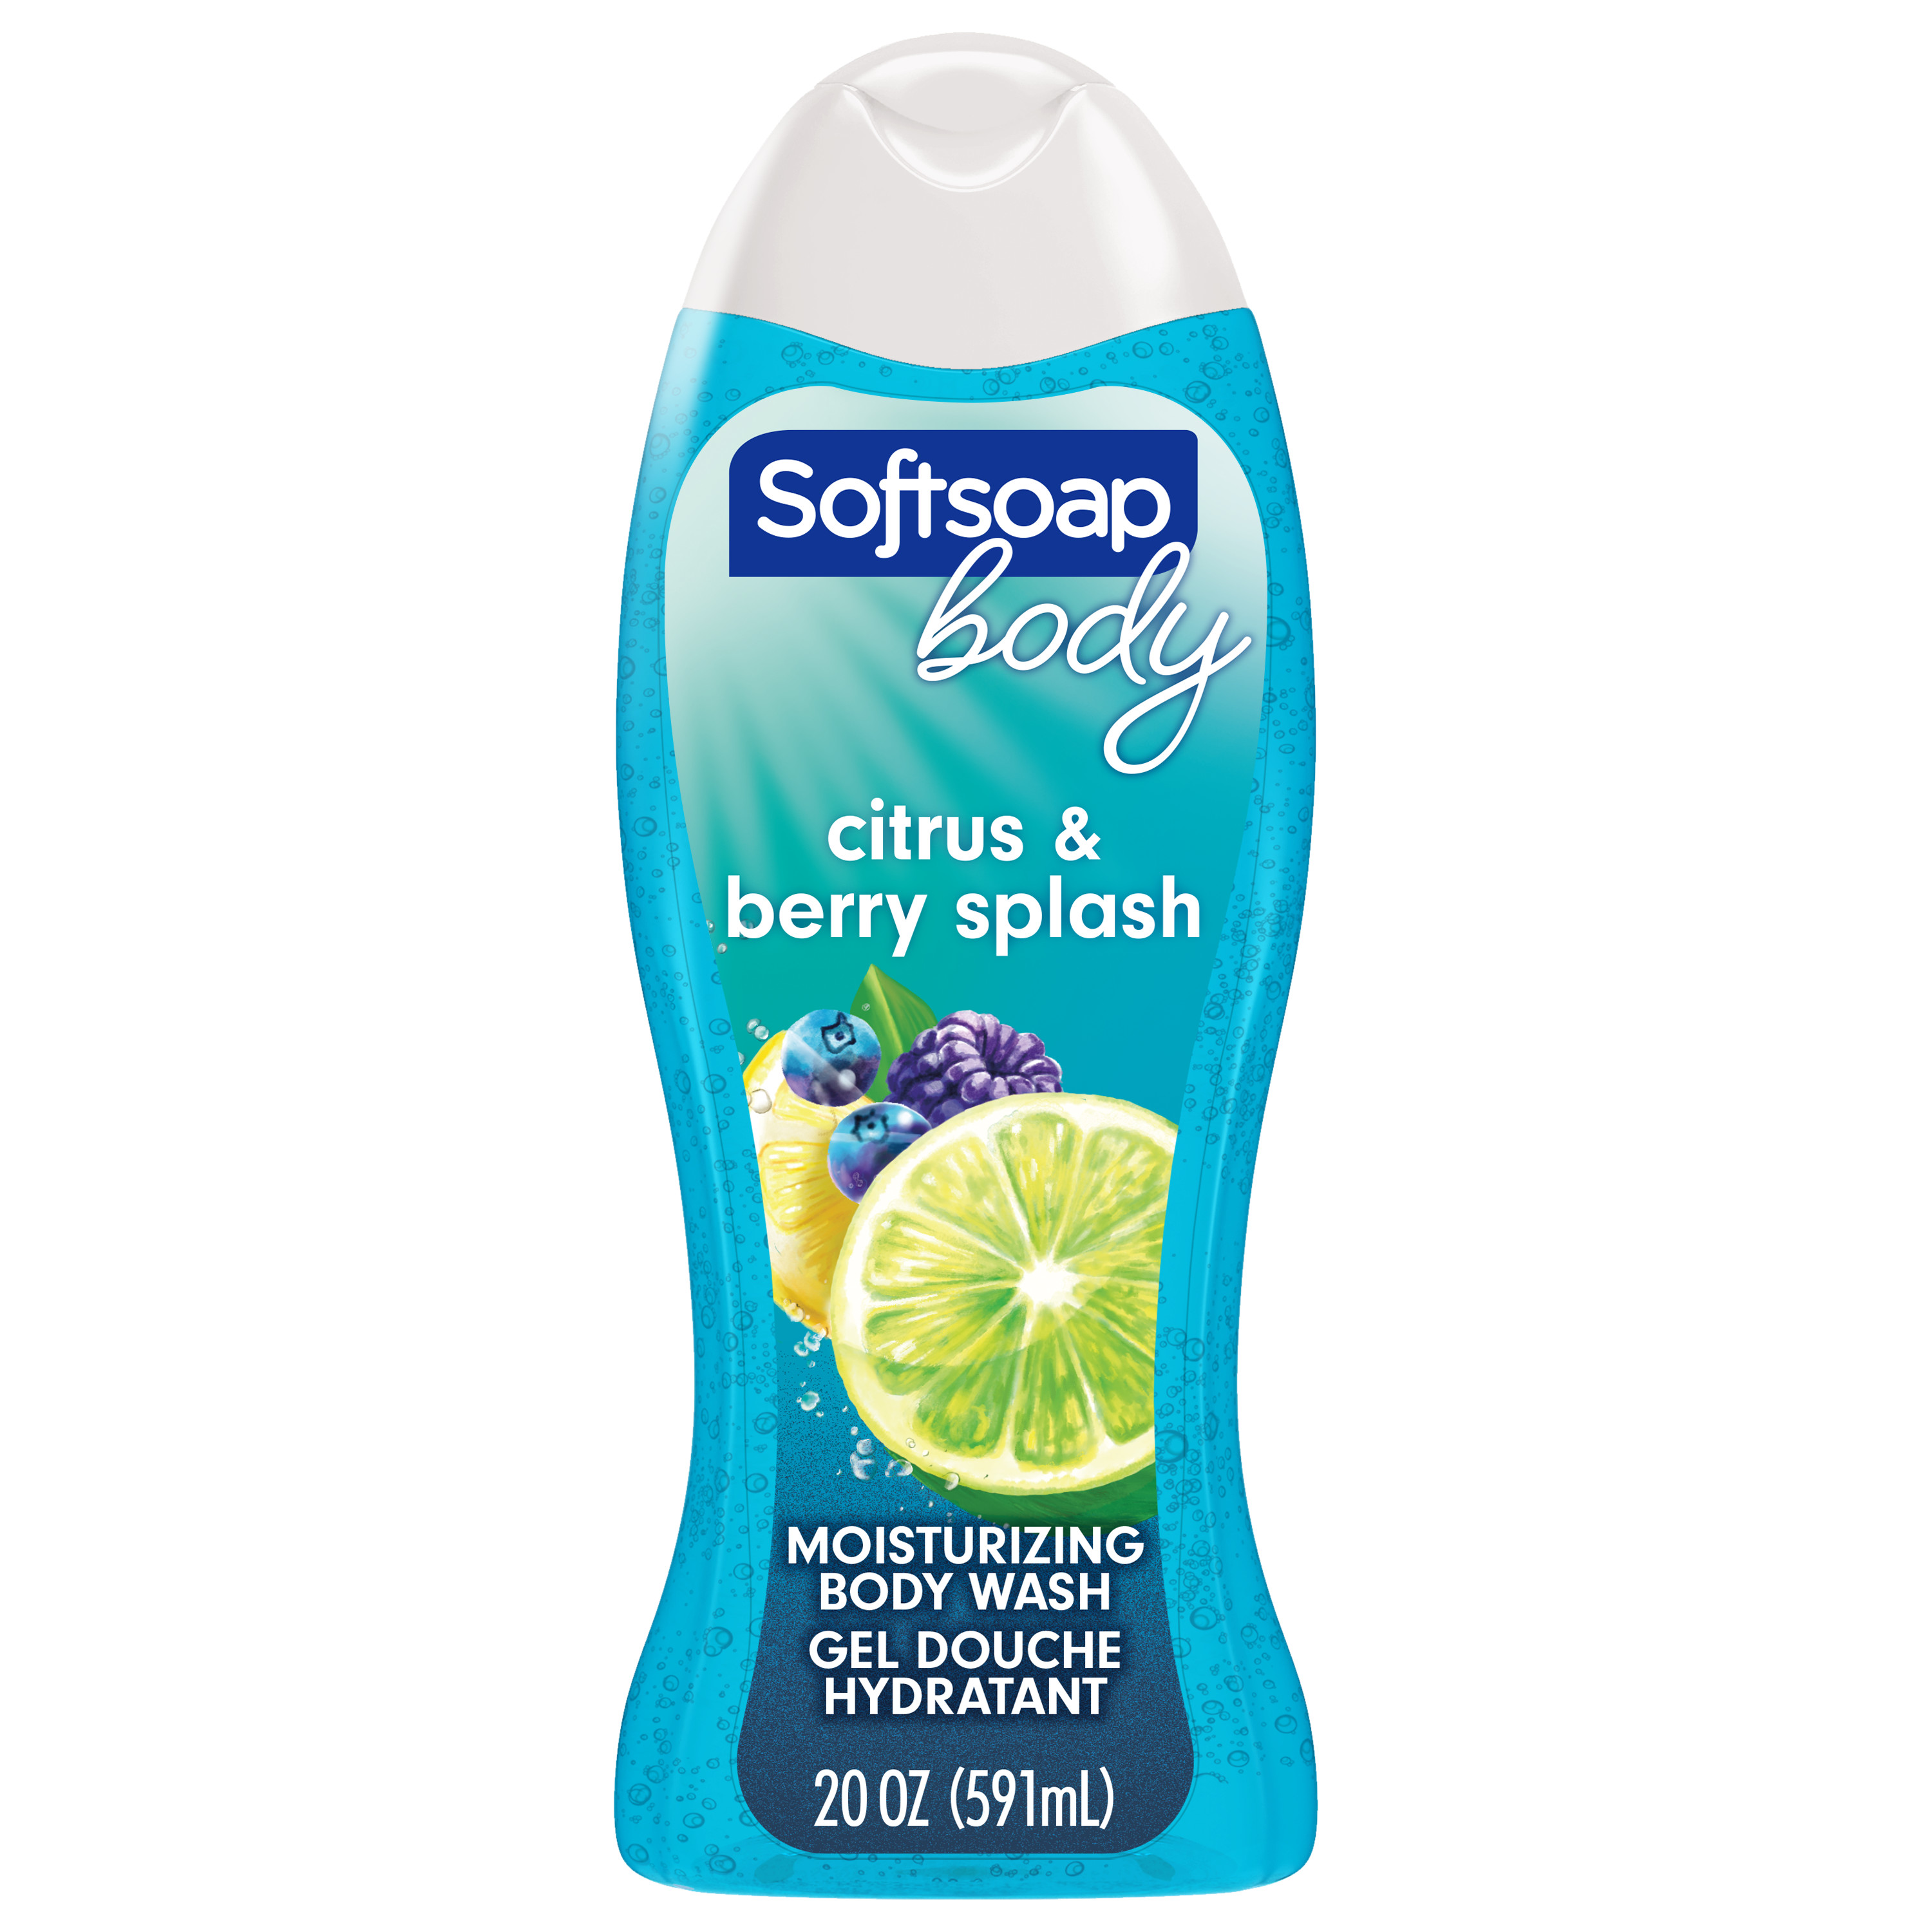 Softsoap Body Citrus Scent & Berry Splash Body Wash, 20 Oz - image 1 of 16